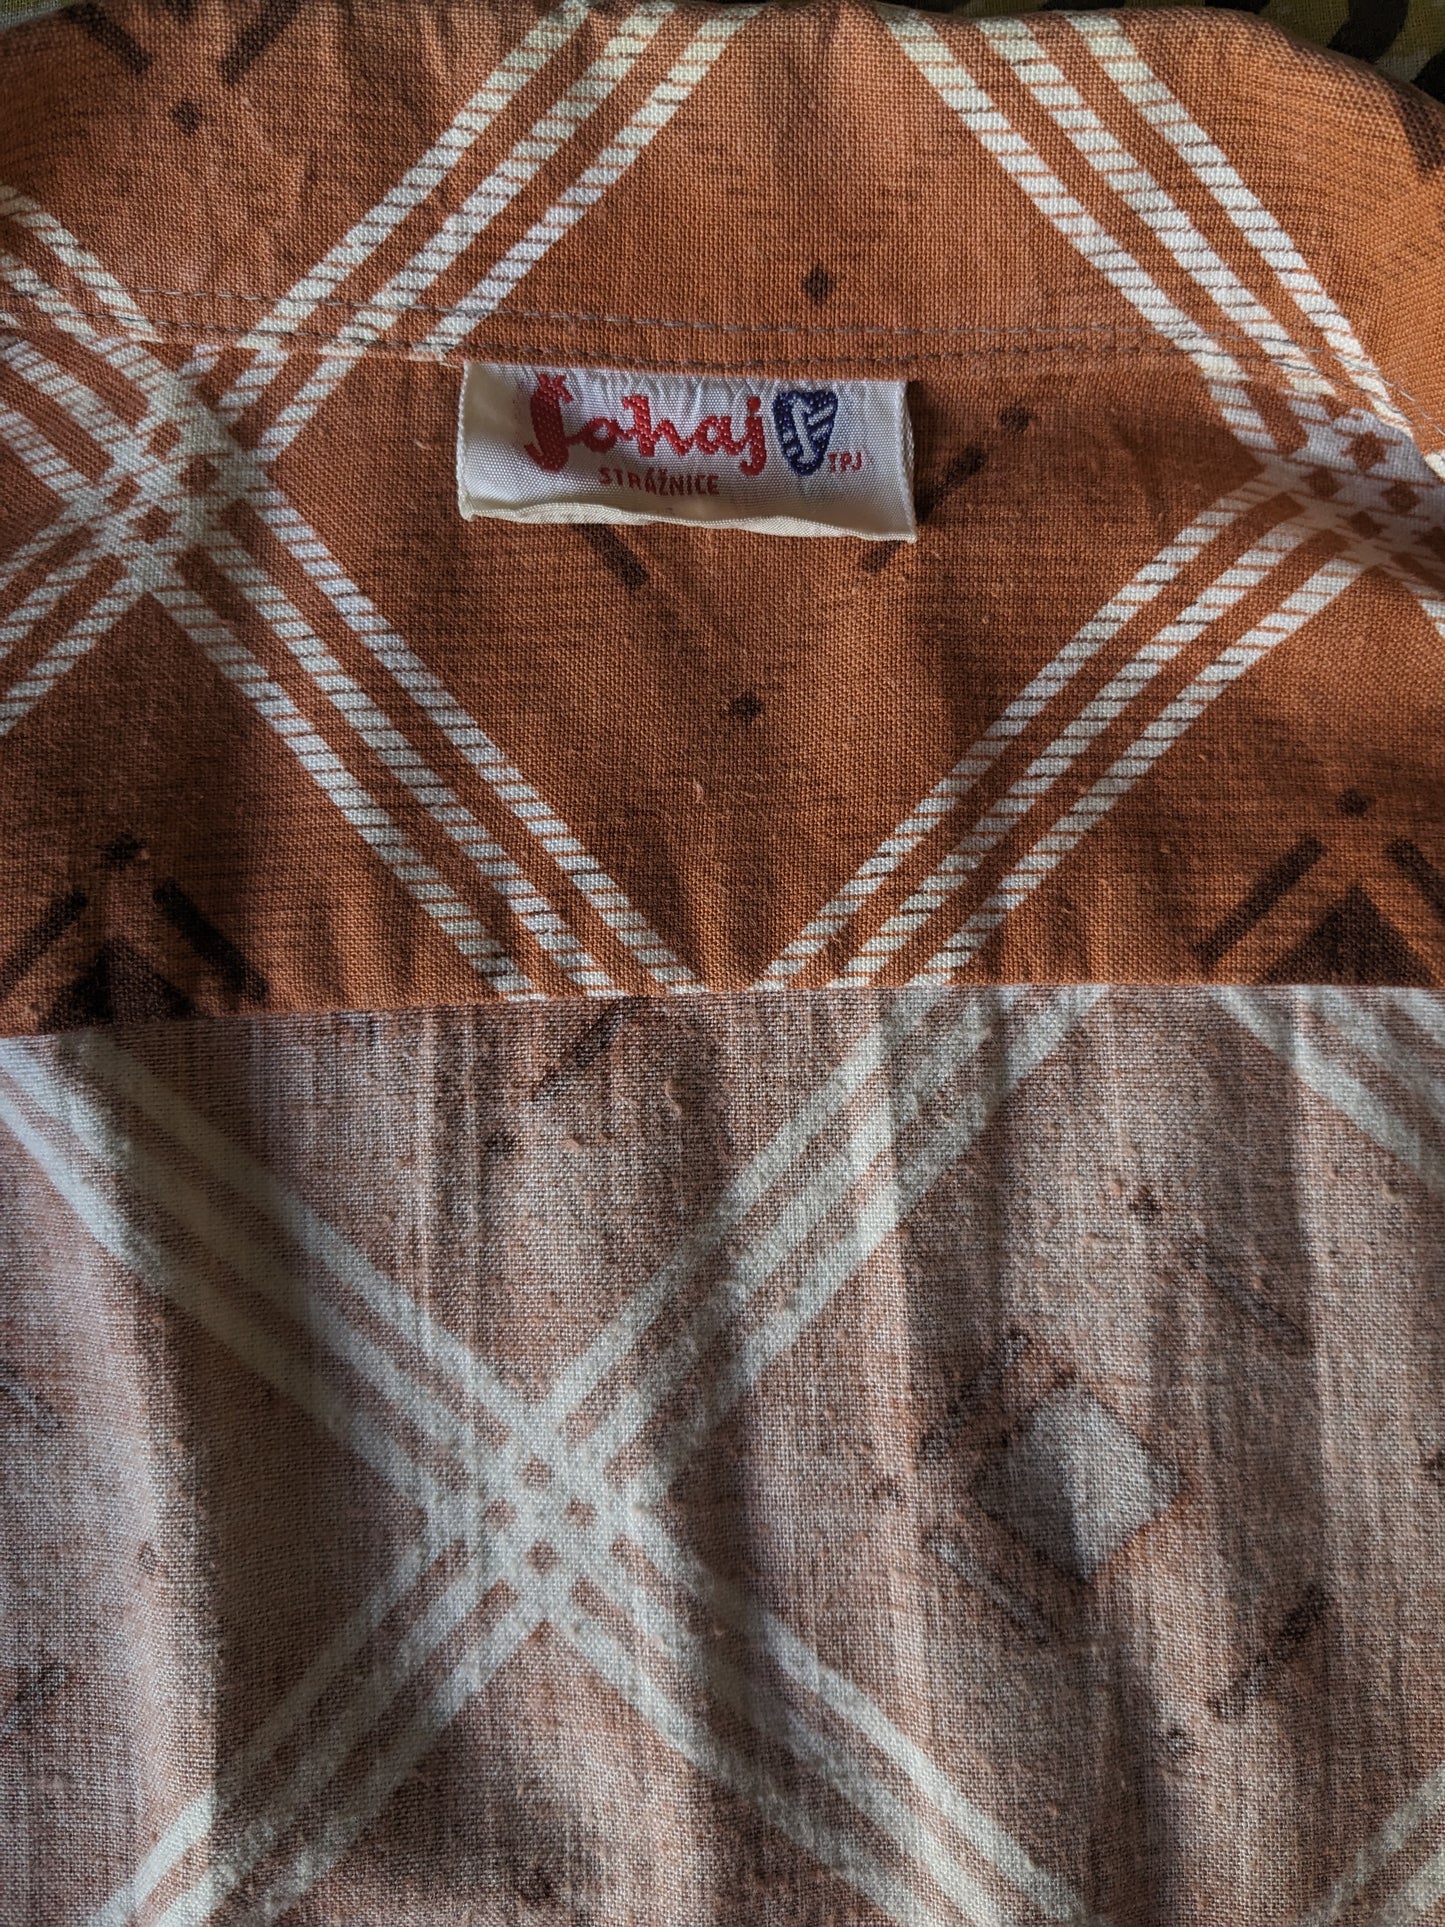 Camisa Vintage Sohaj 70. Estampado marrón blanco naranja. Talla L.